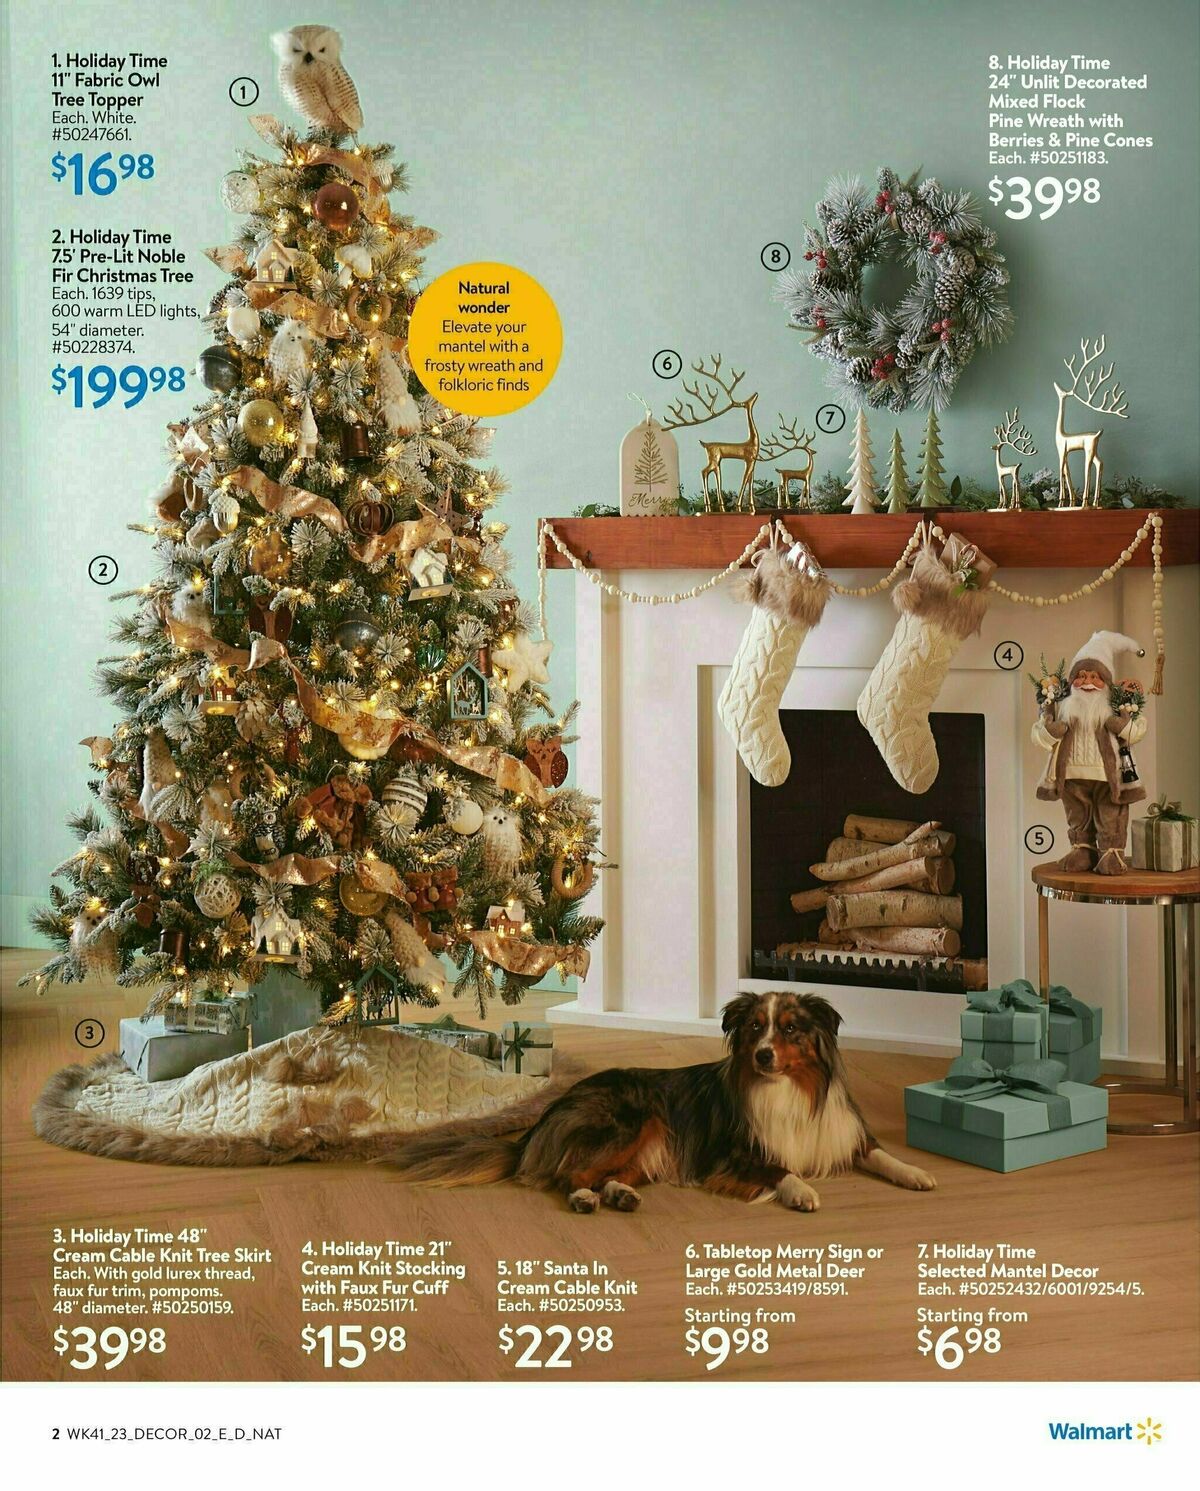 Walmart Holiday Decor Flyer from November 2